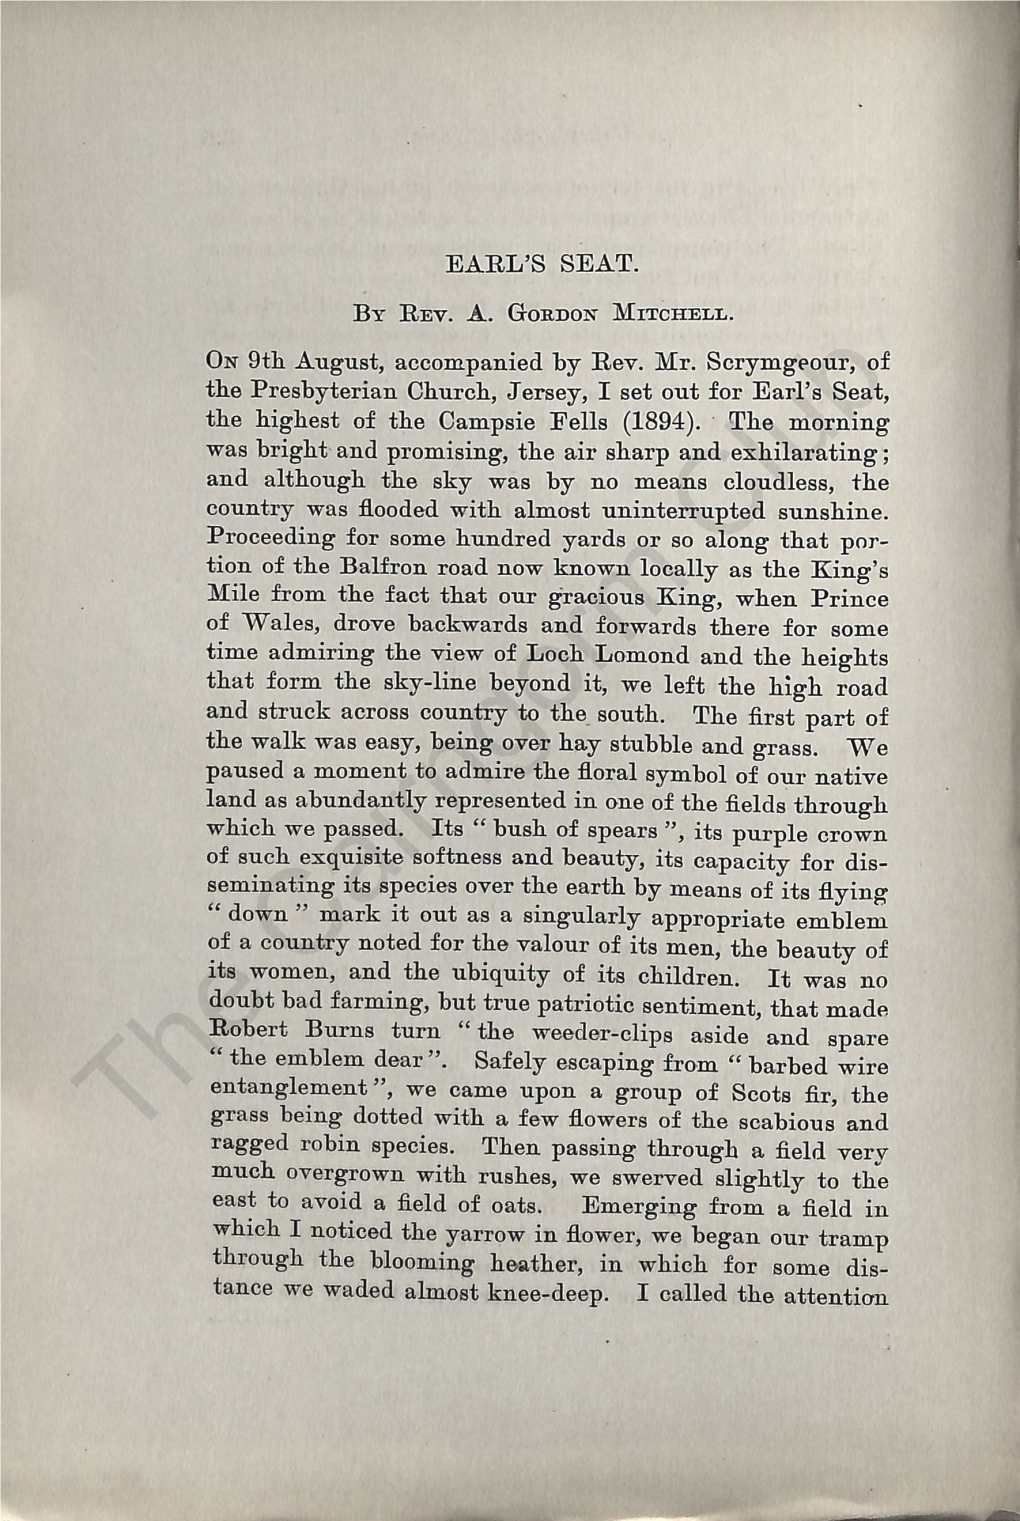 The Cairngorm Club Journal 024, 1905